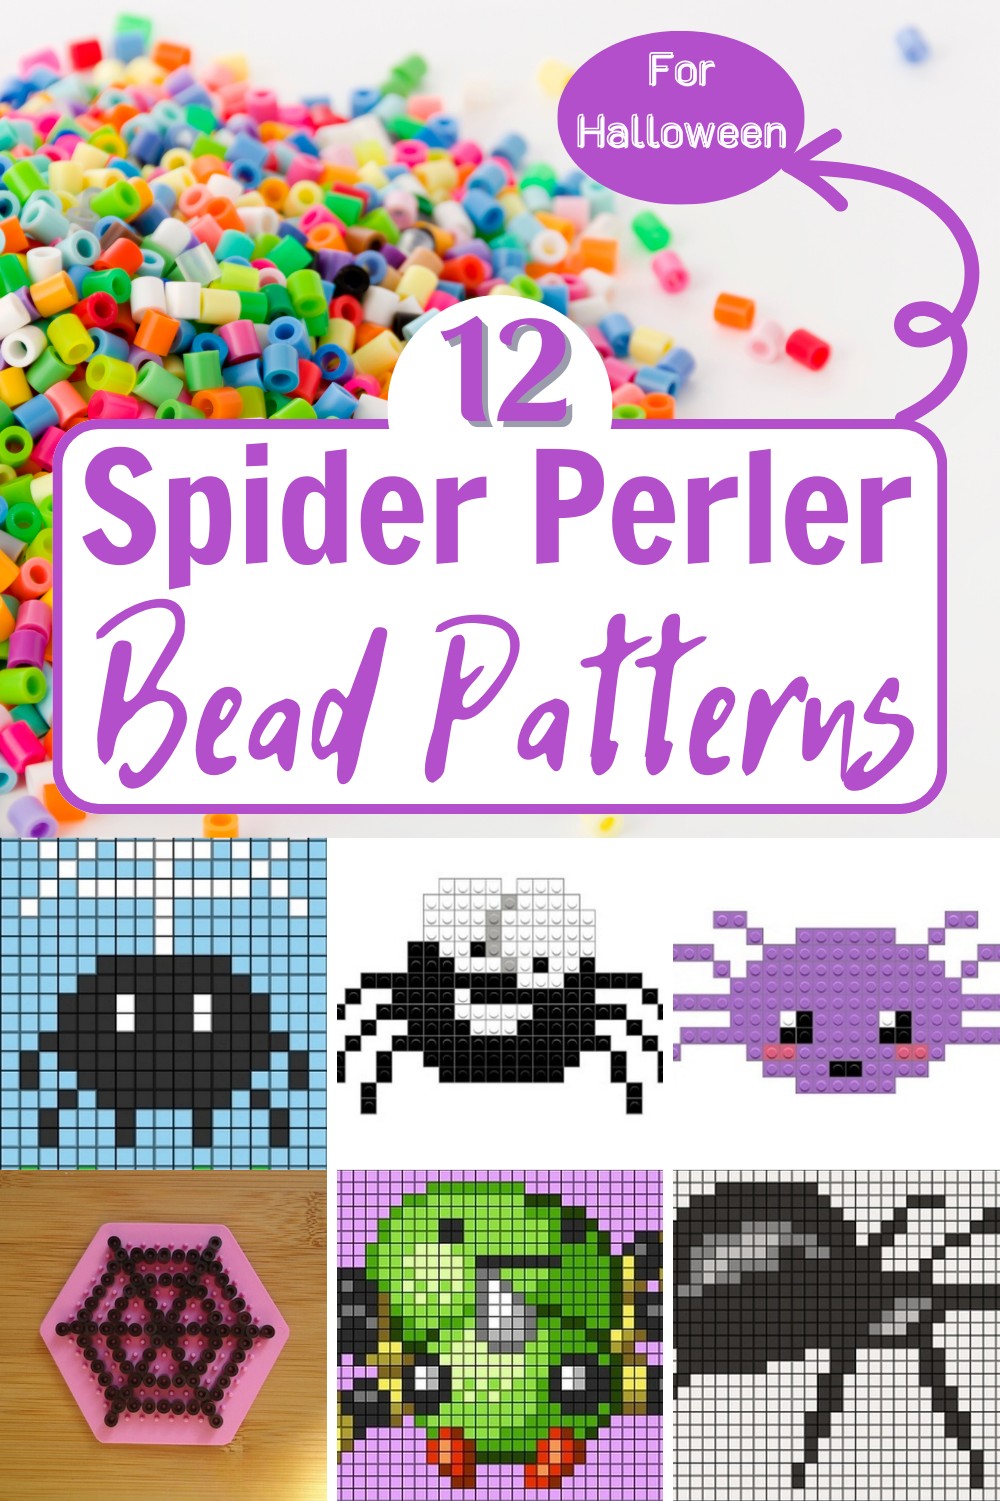 12 Spider Perler Bead Patterns For Halloween